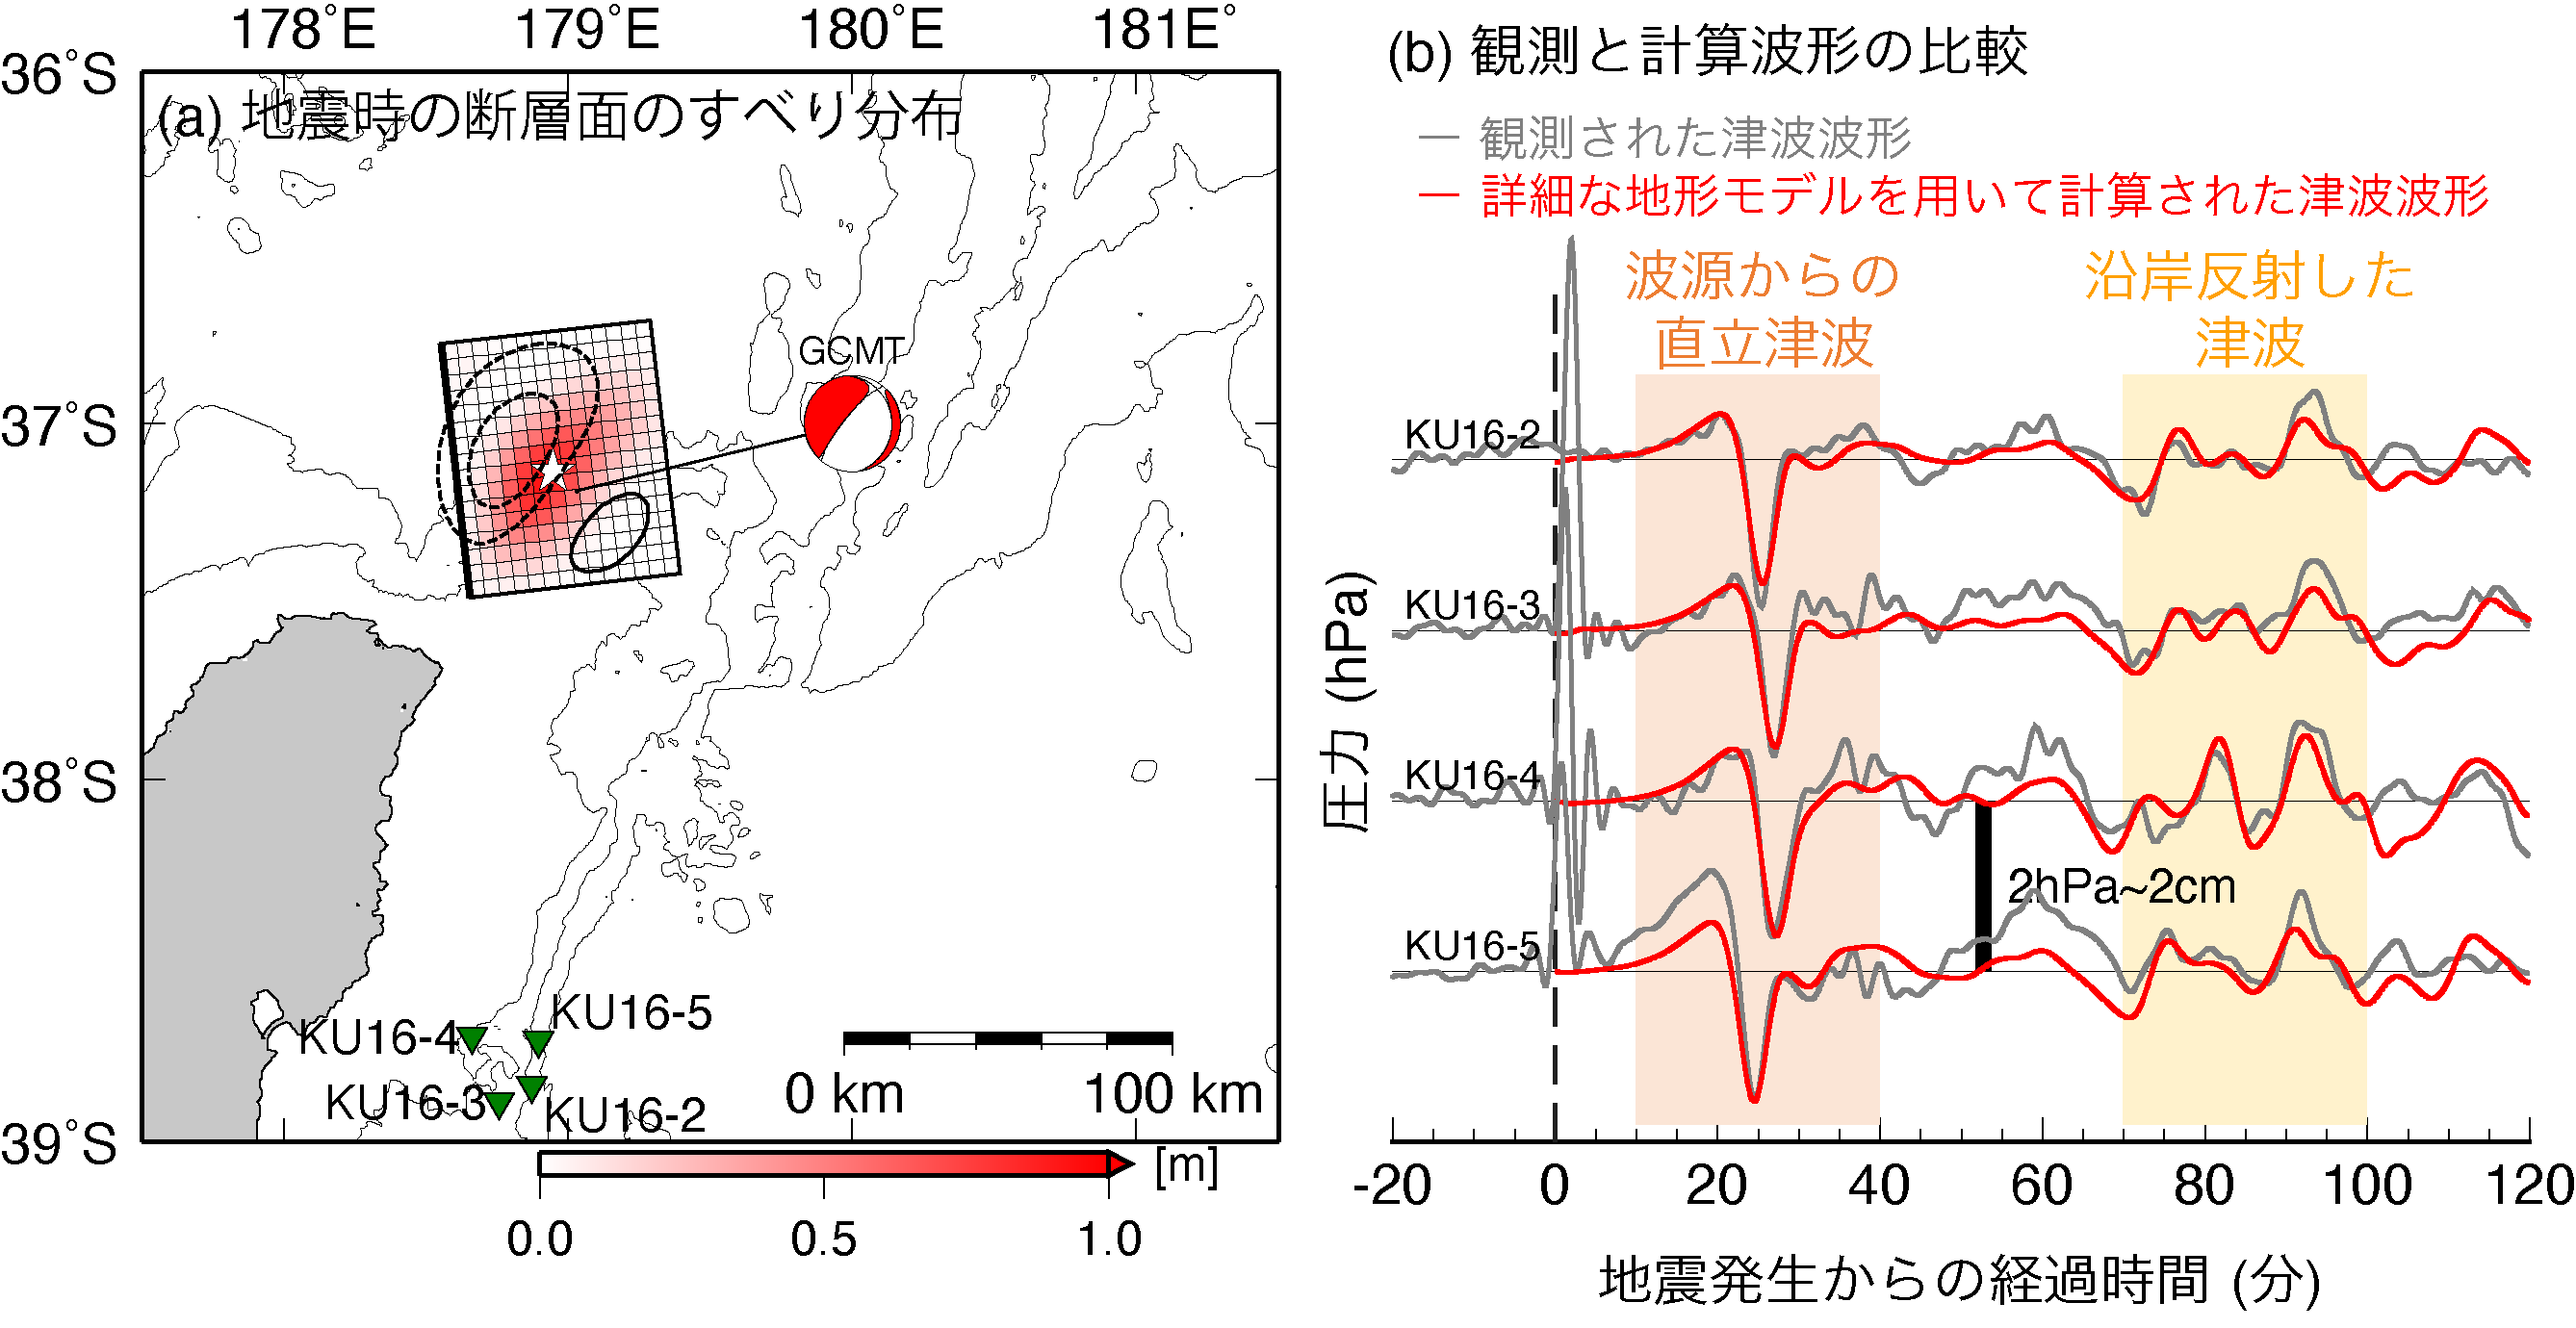 (a) 2016年テ・アラロア地震の震源断層と津波波源の波高分布．(b) 海底圧力計により観測された津波記録 (黒線) と，(a) の断層から計算された津波波形 (赤線)．